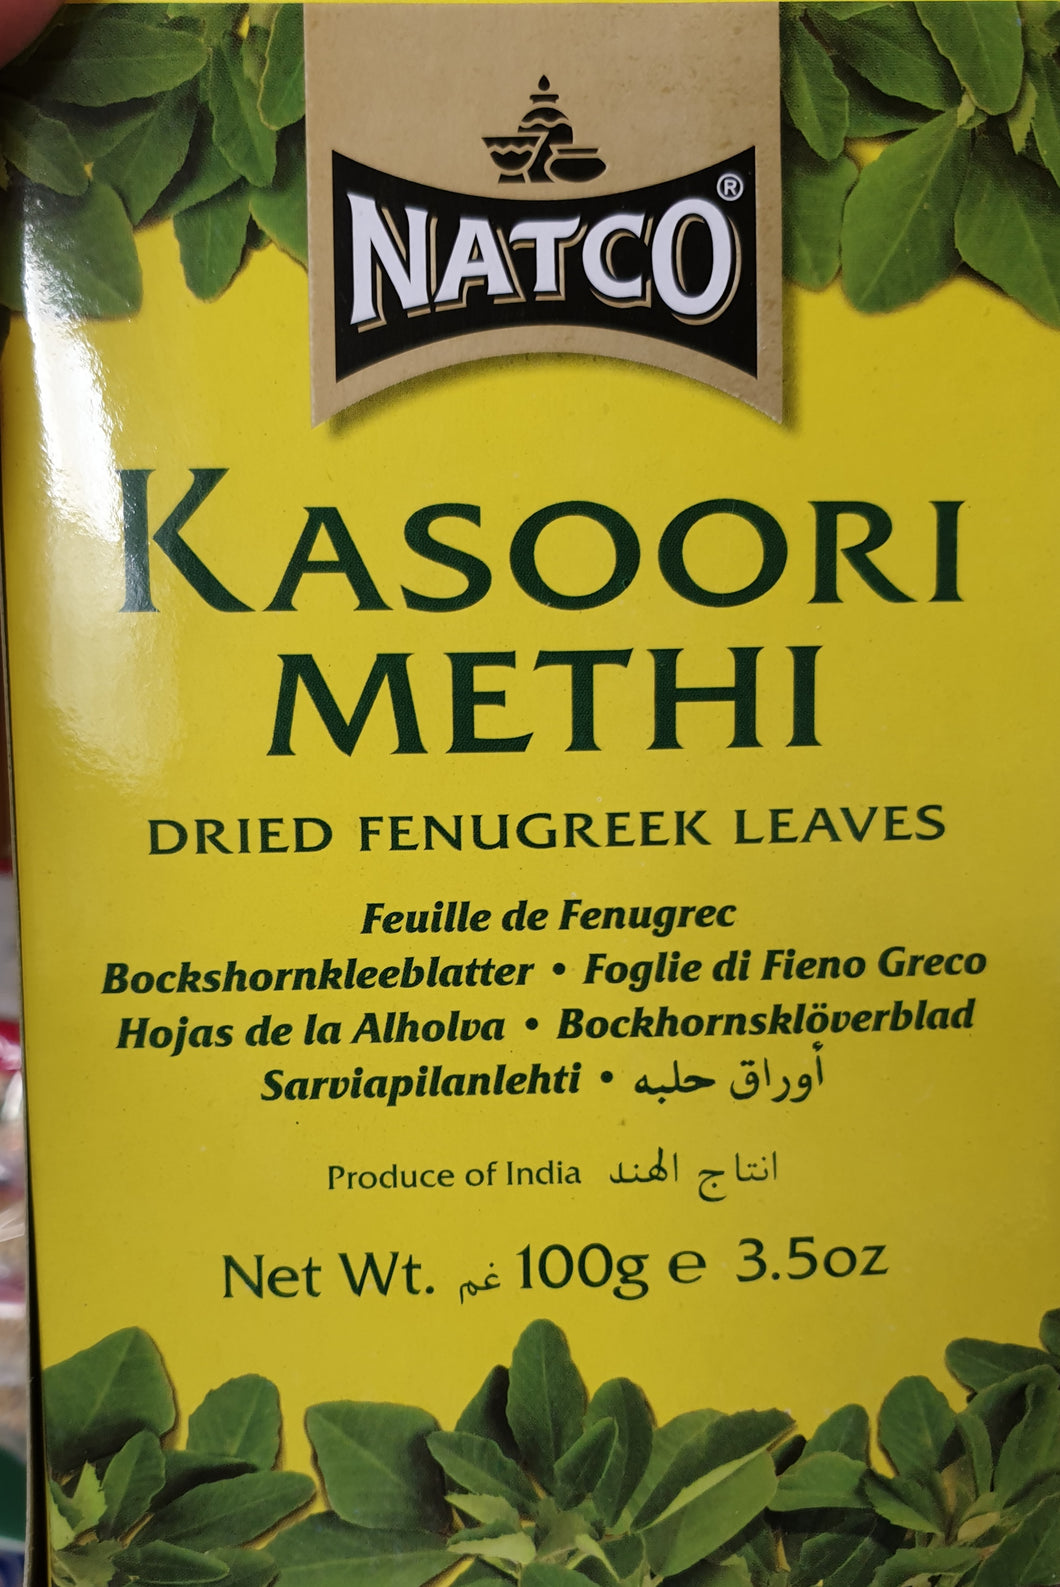 NATCO KASOORI METHI Dried Fenugreek Leaves 100g